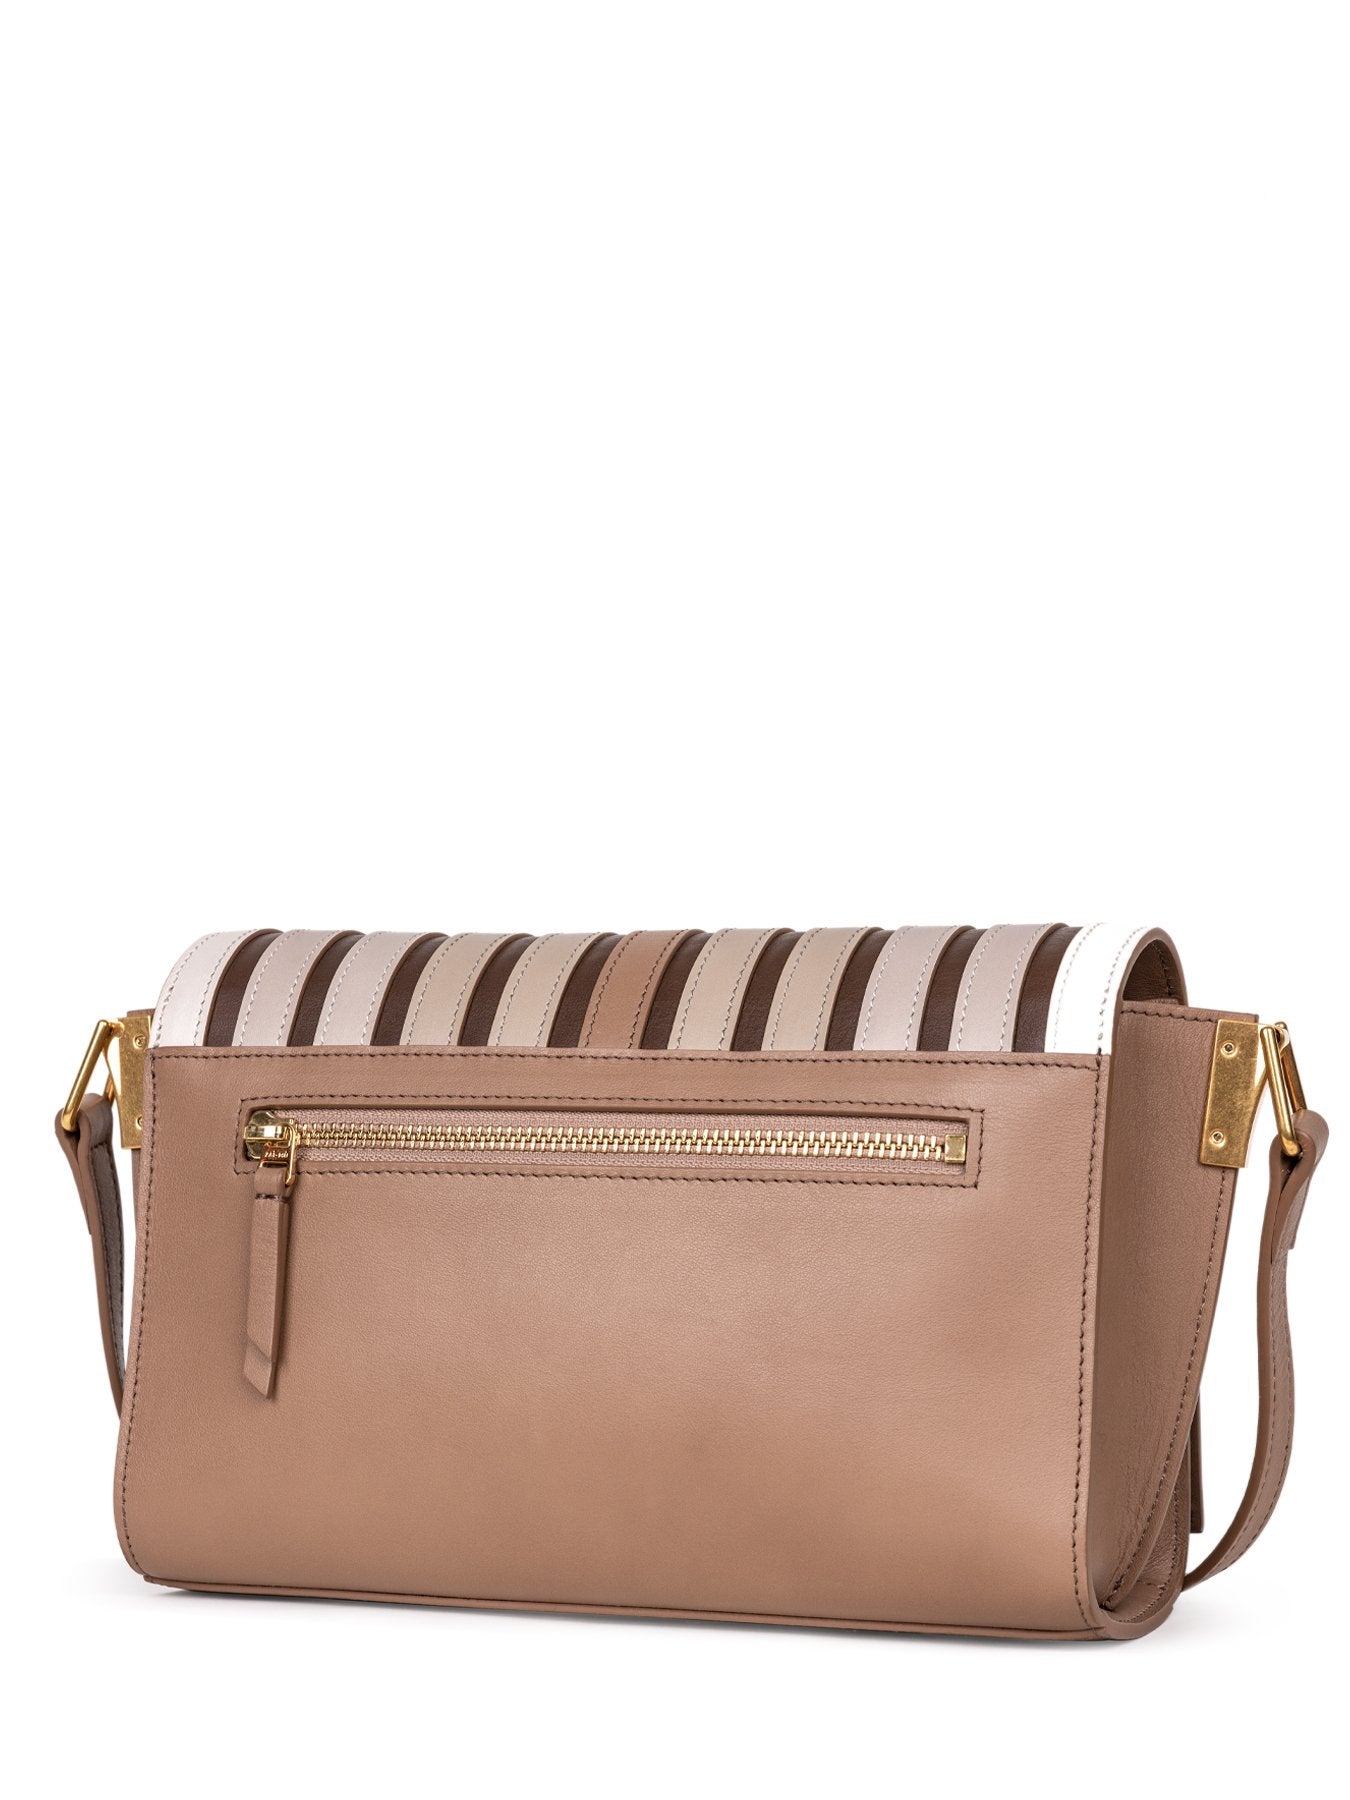 net-a-porter handbag in brown leather